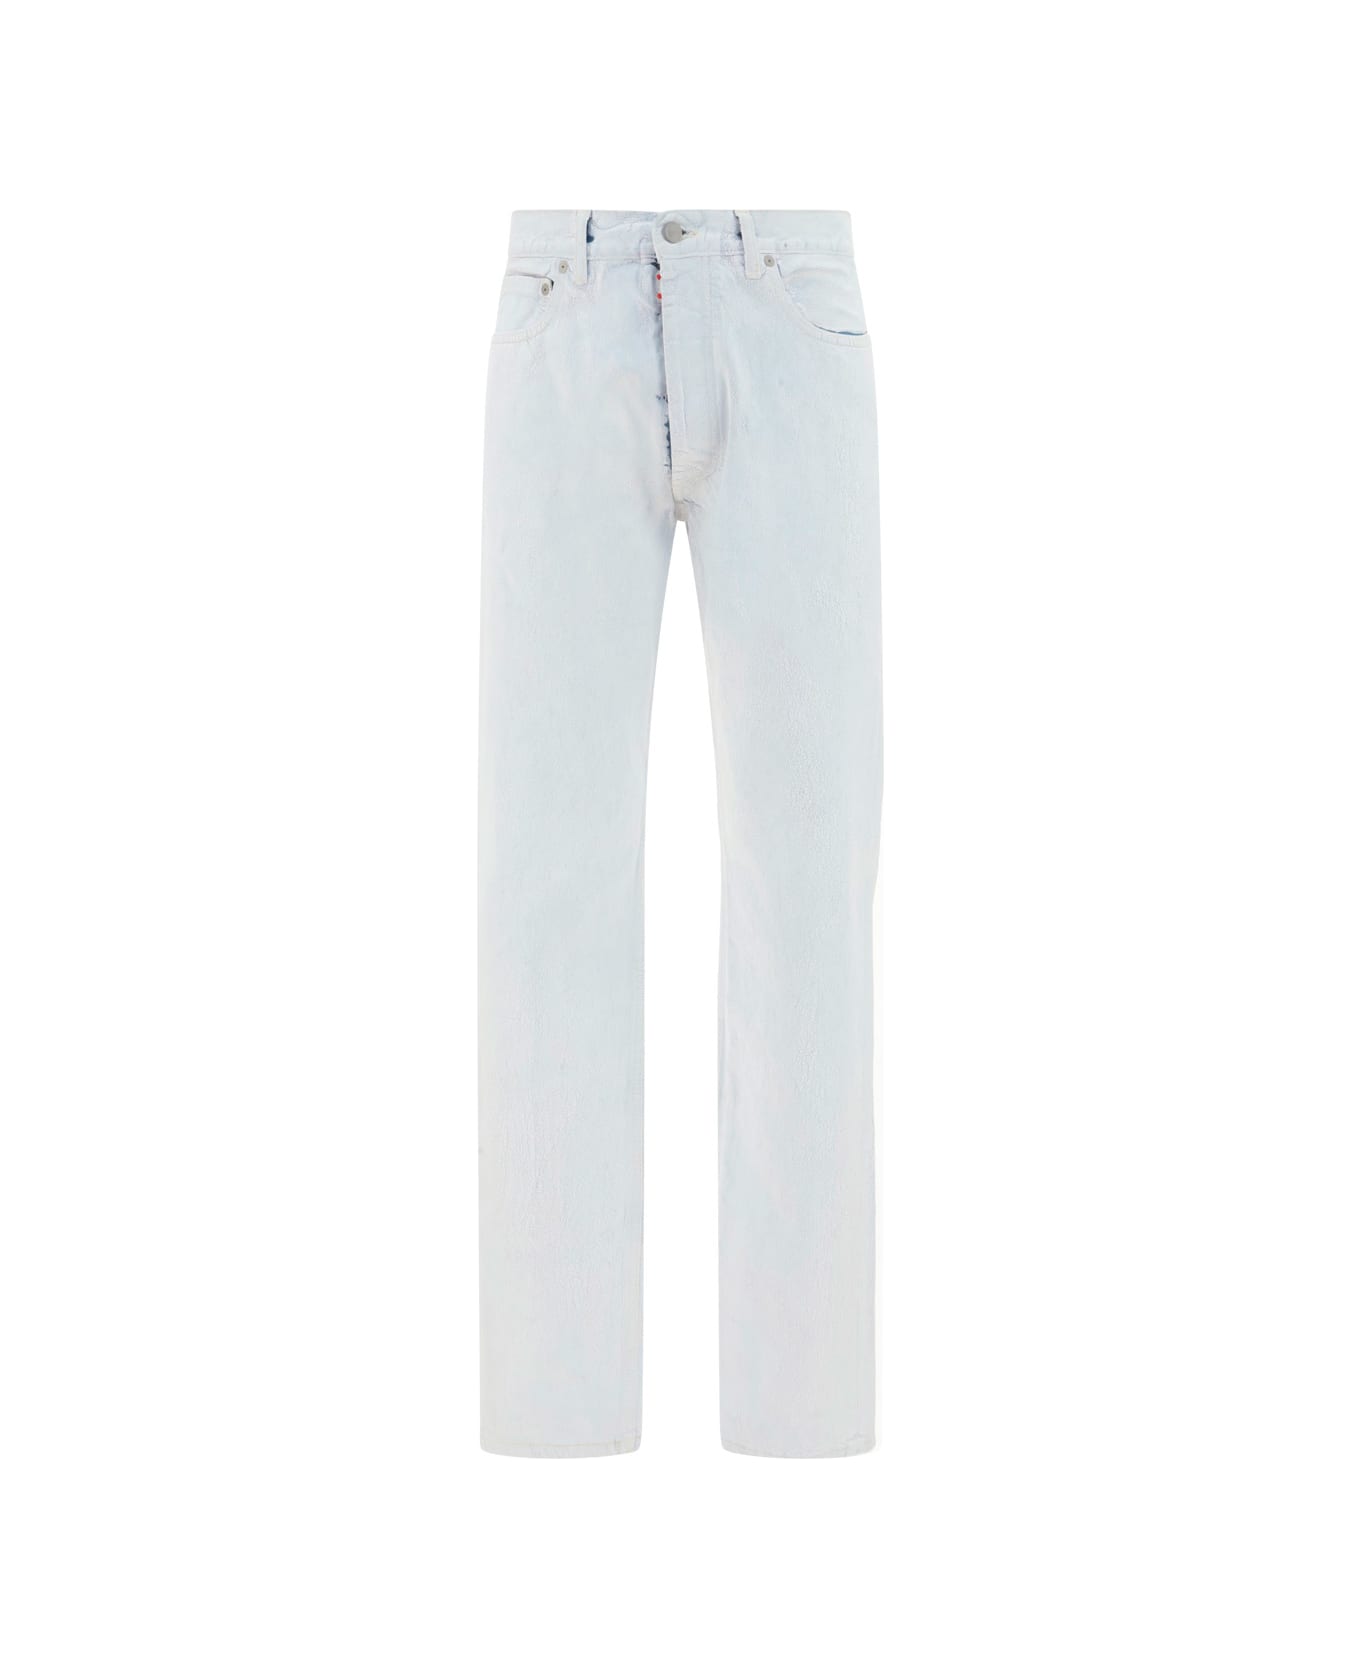 Maison Margiela Jeans - White Crack